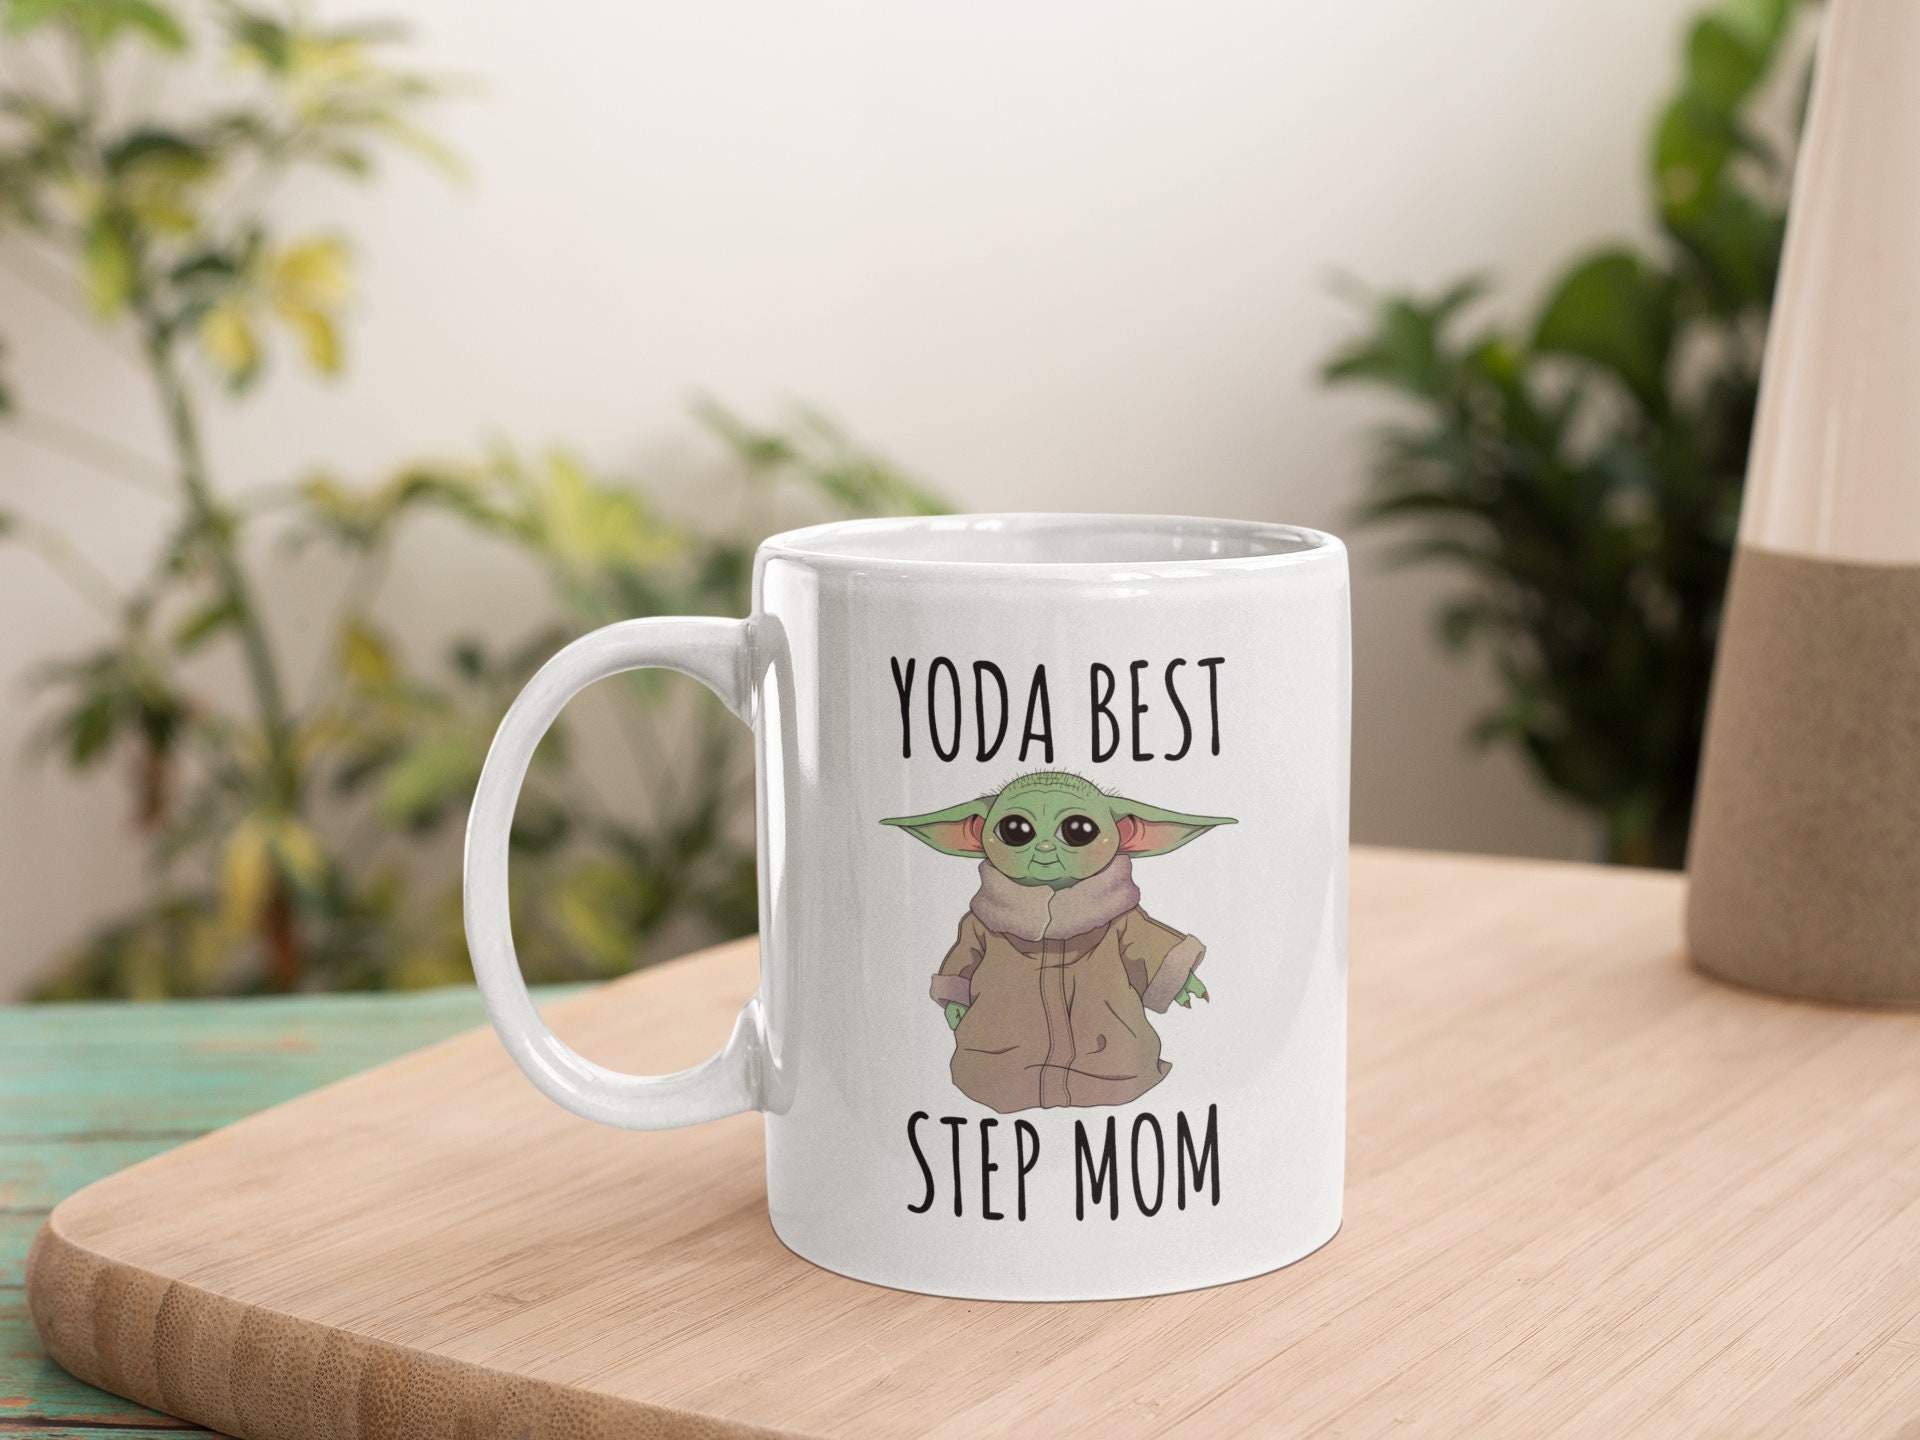 Yoda Best Mom Mugs